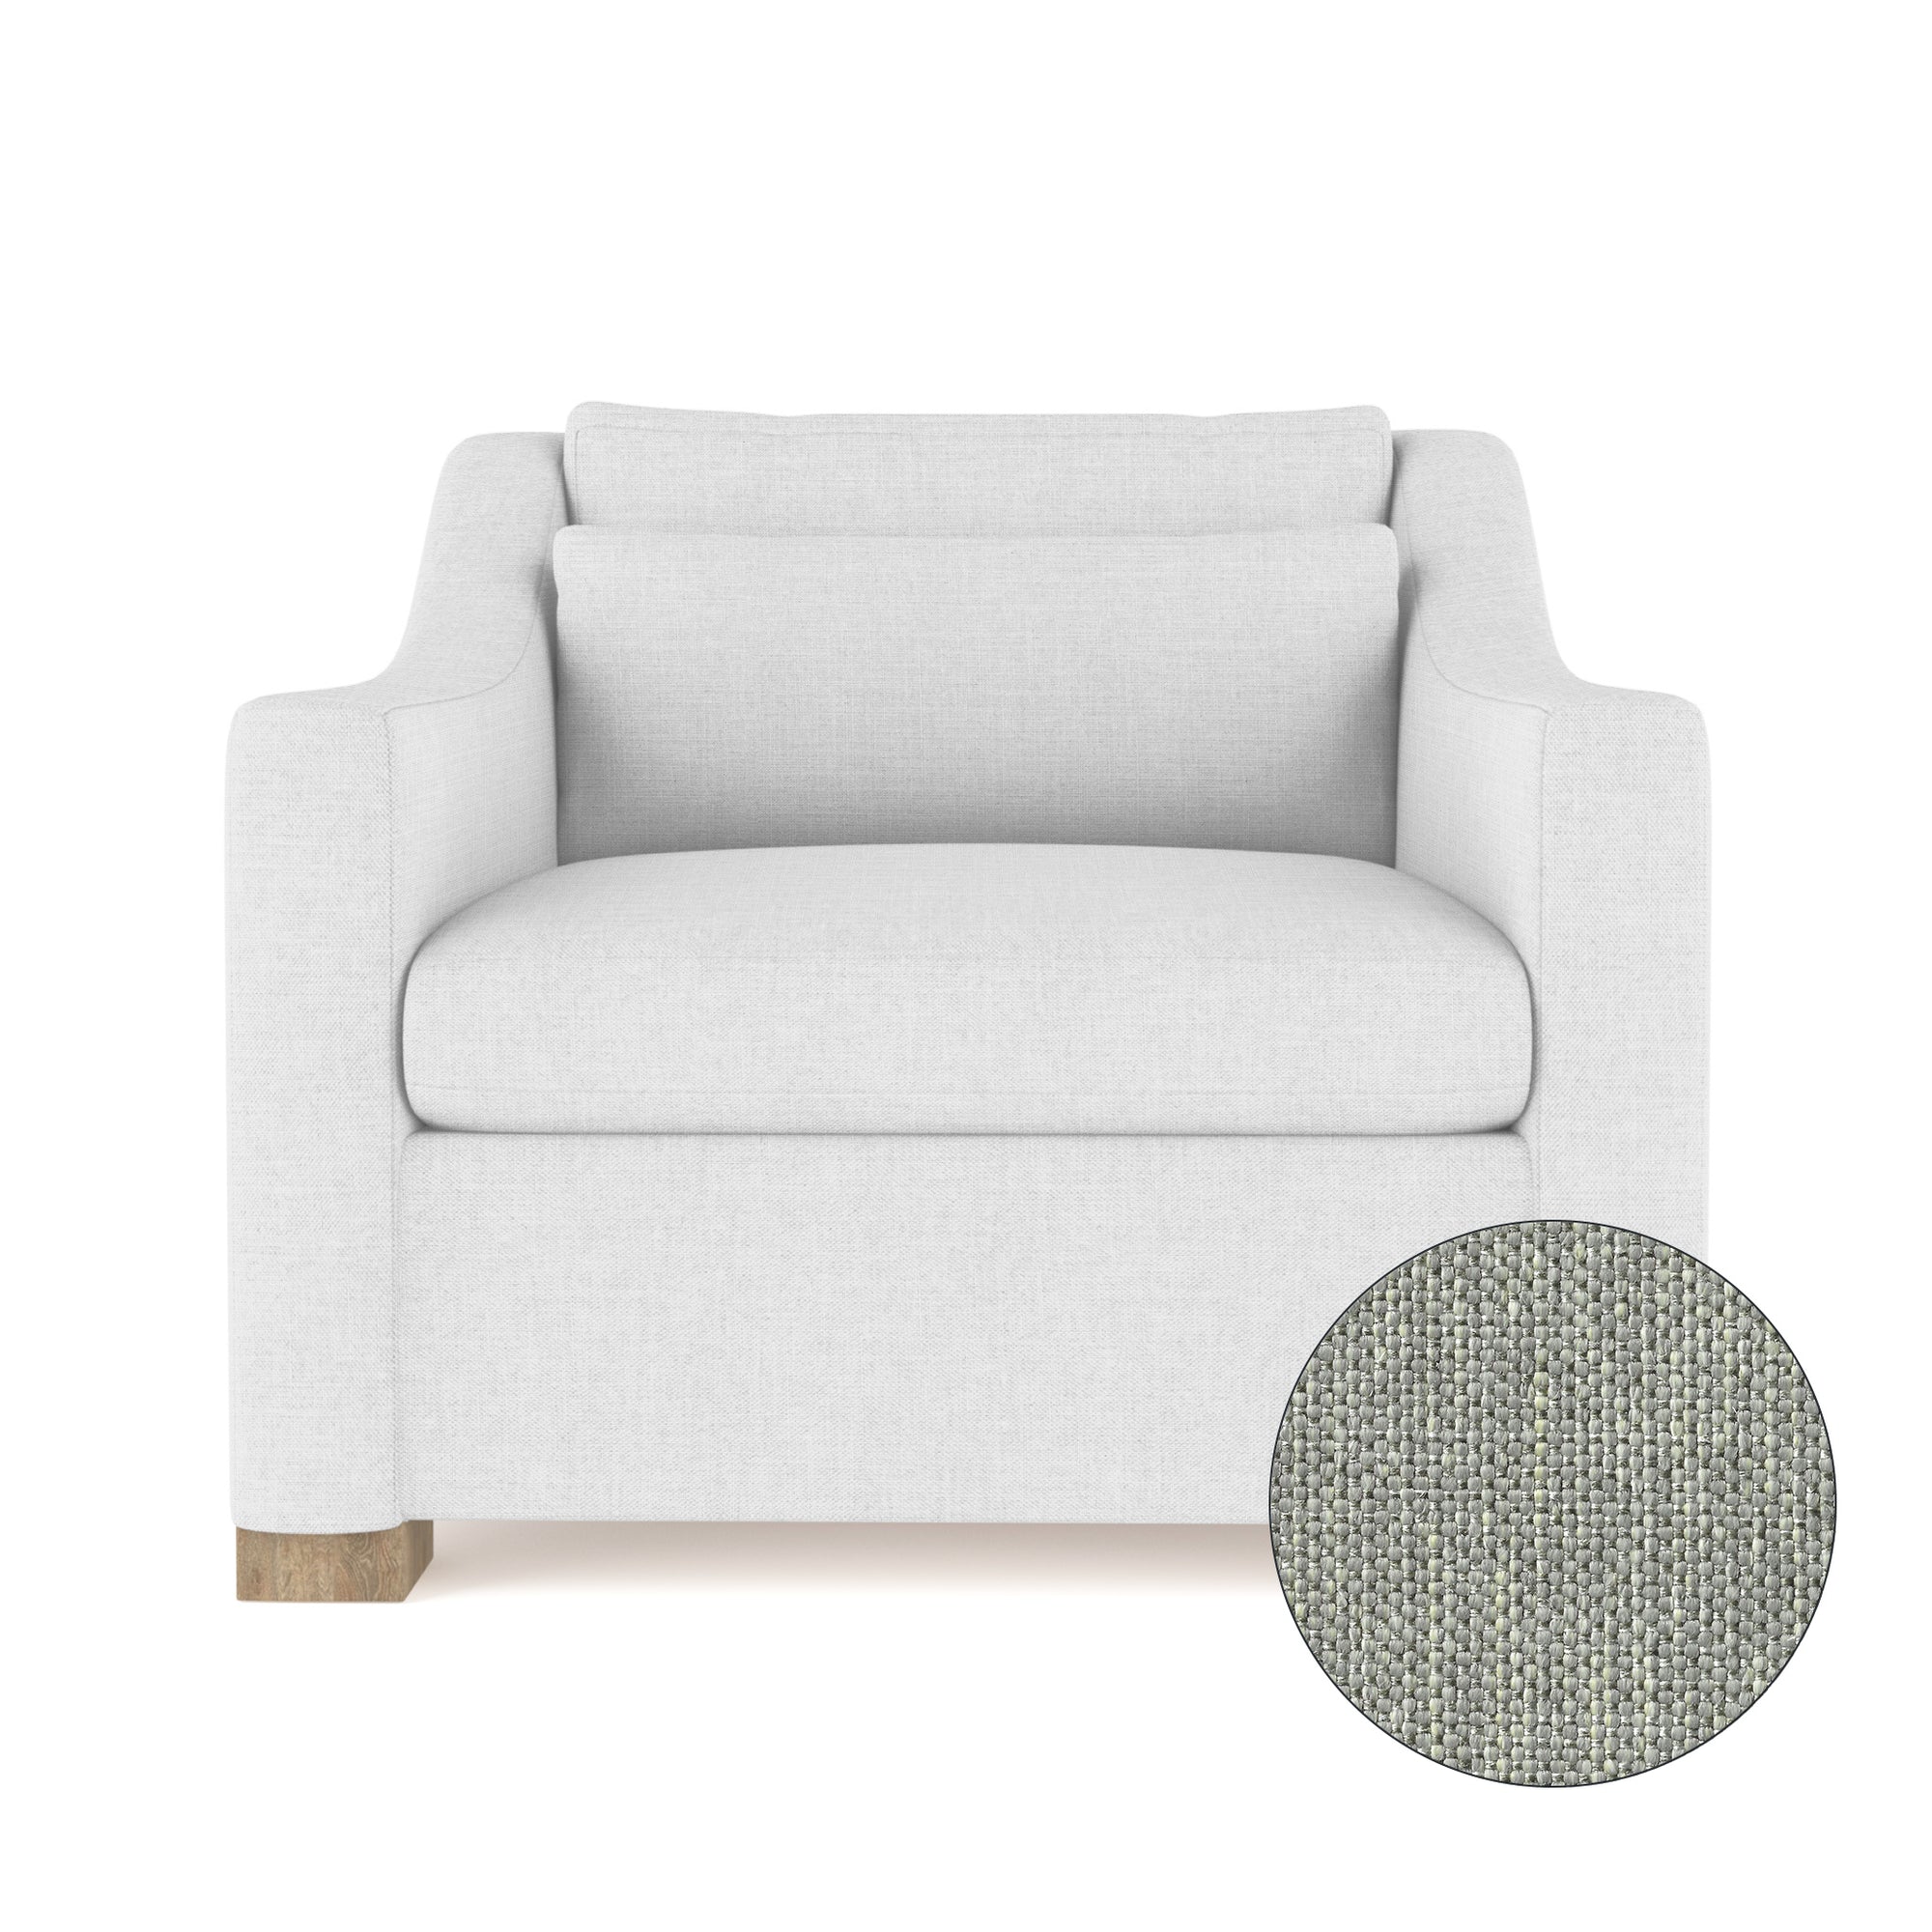 Crosby Chair - Haze Pebble Weave Linen